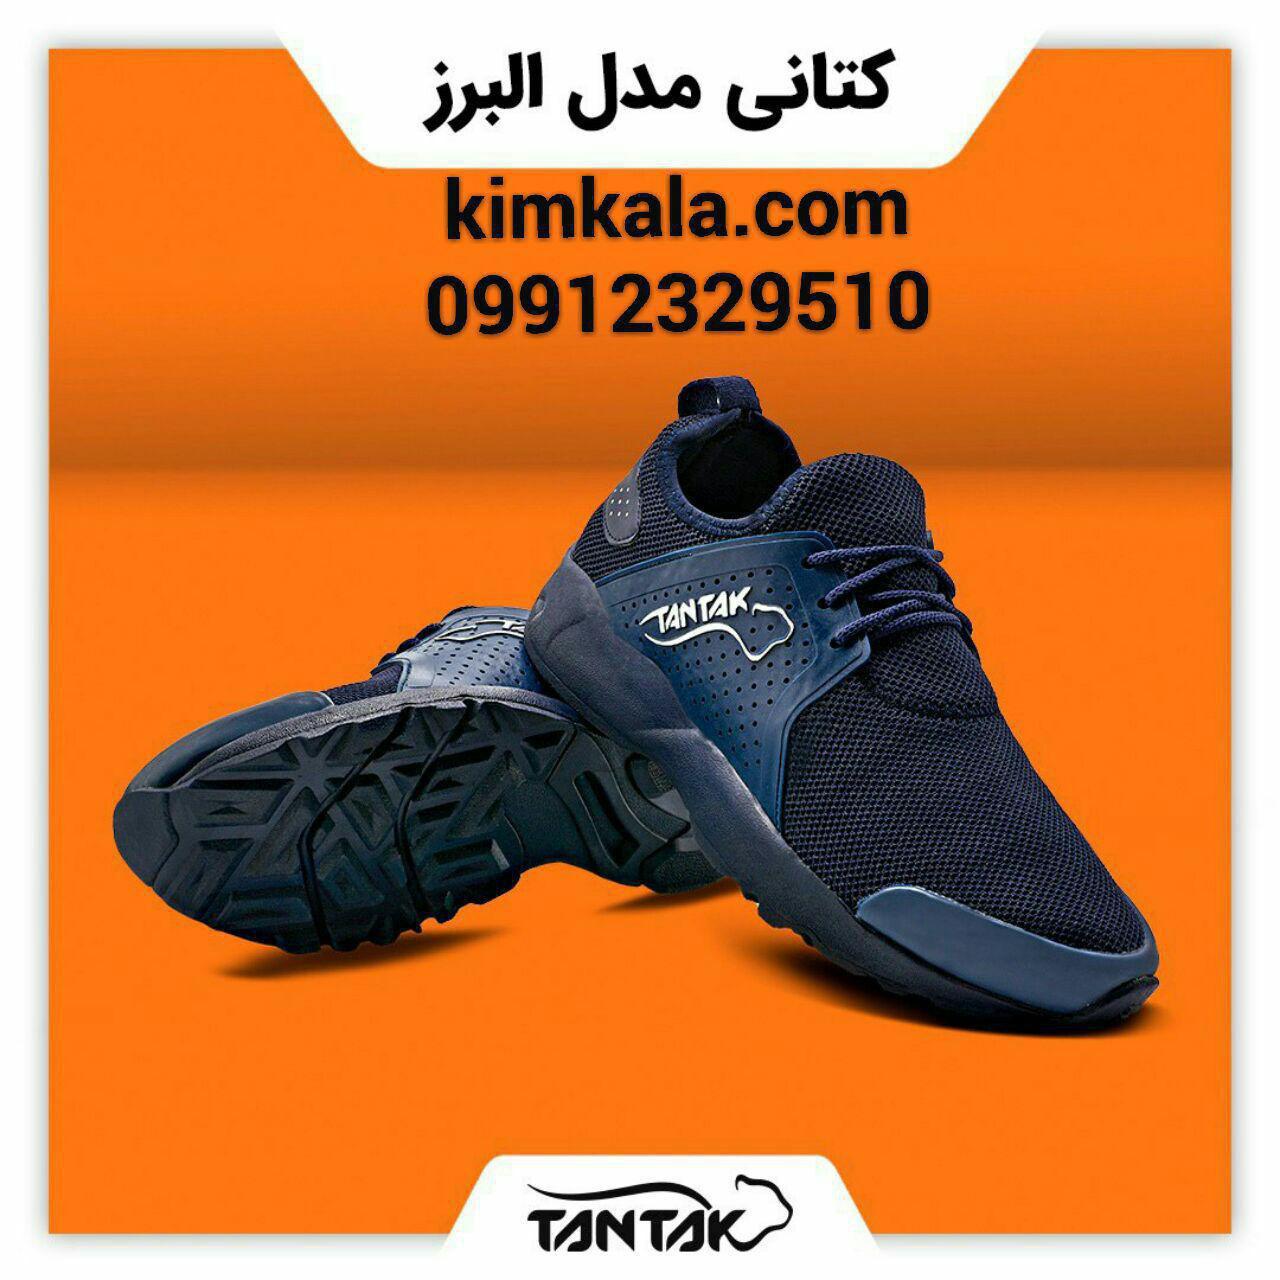 کفش تنتاک مدل البرز 09912329510